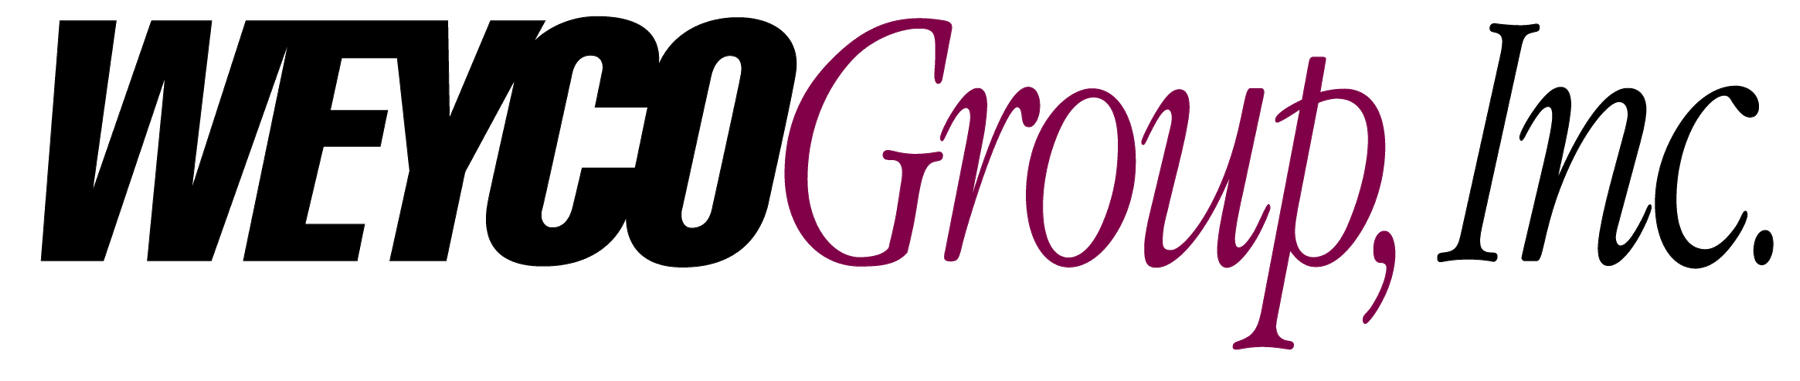 Weyco Group, Inc. logo